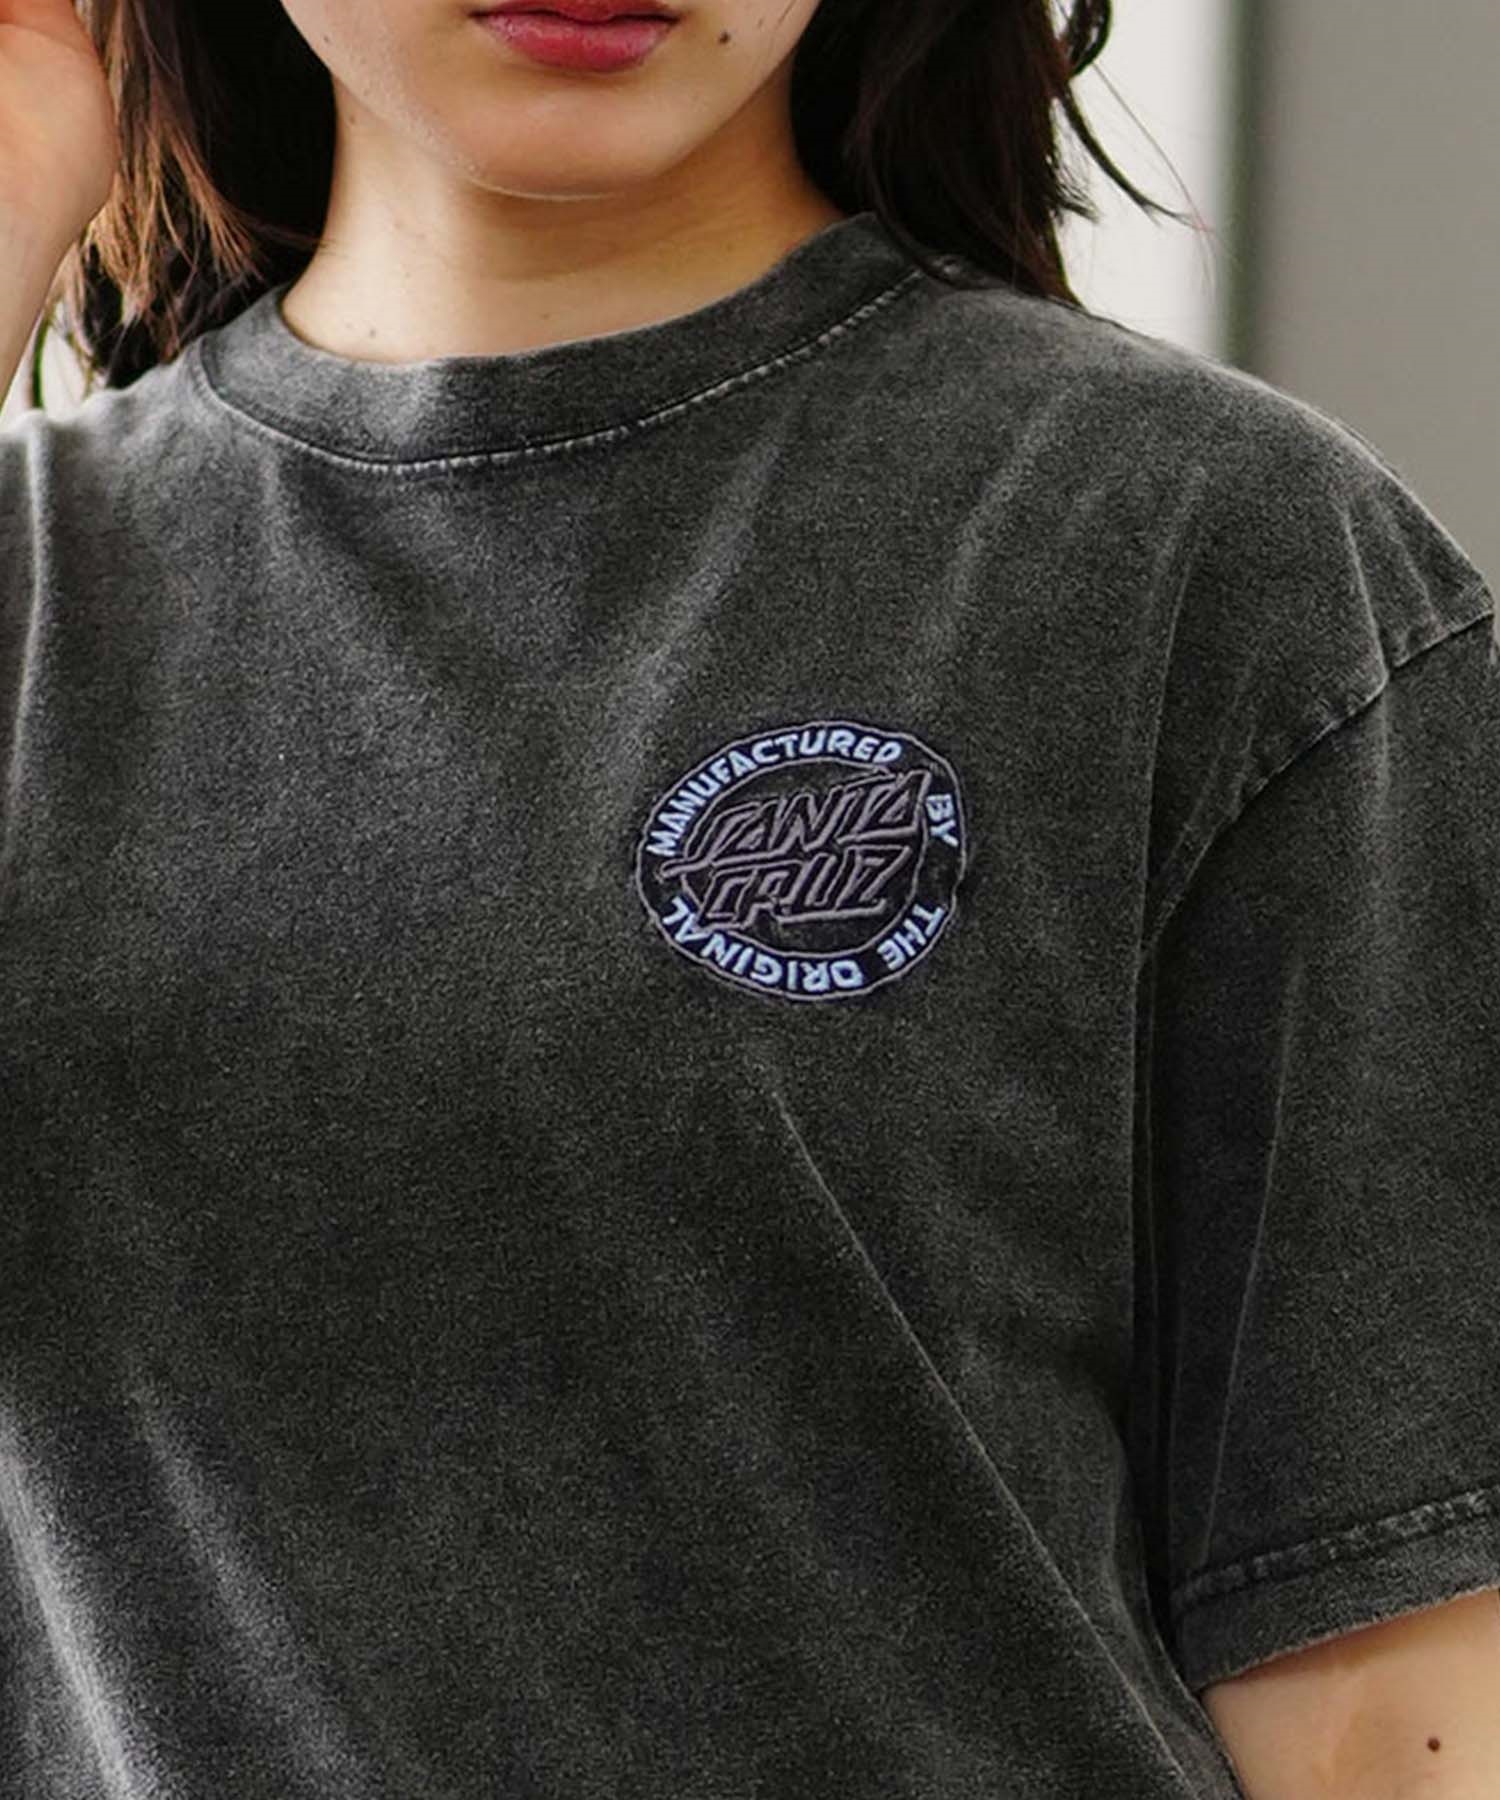 SANTACRUZ サンタクルーズ レディース 半袖 Tシャツ 刺繍ロゴ オーバーサイズ ユニセックス ムラサキスポーツ限定 502242441(GREEN-M)